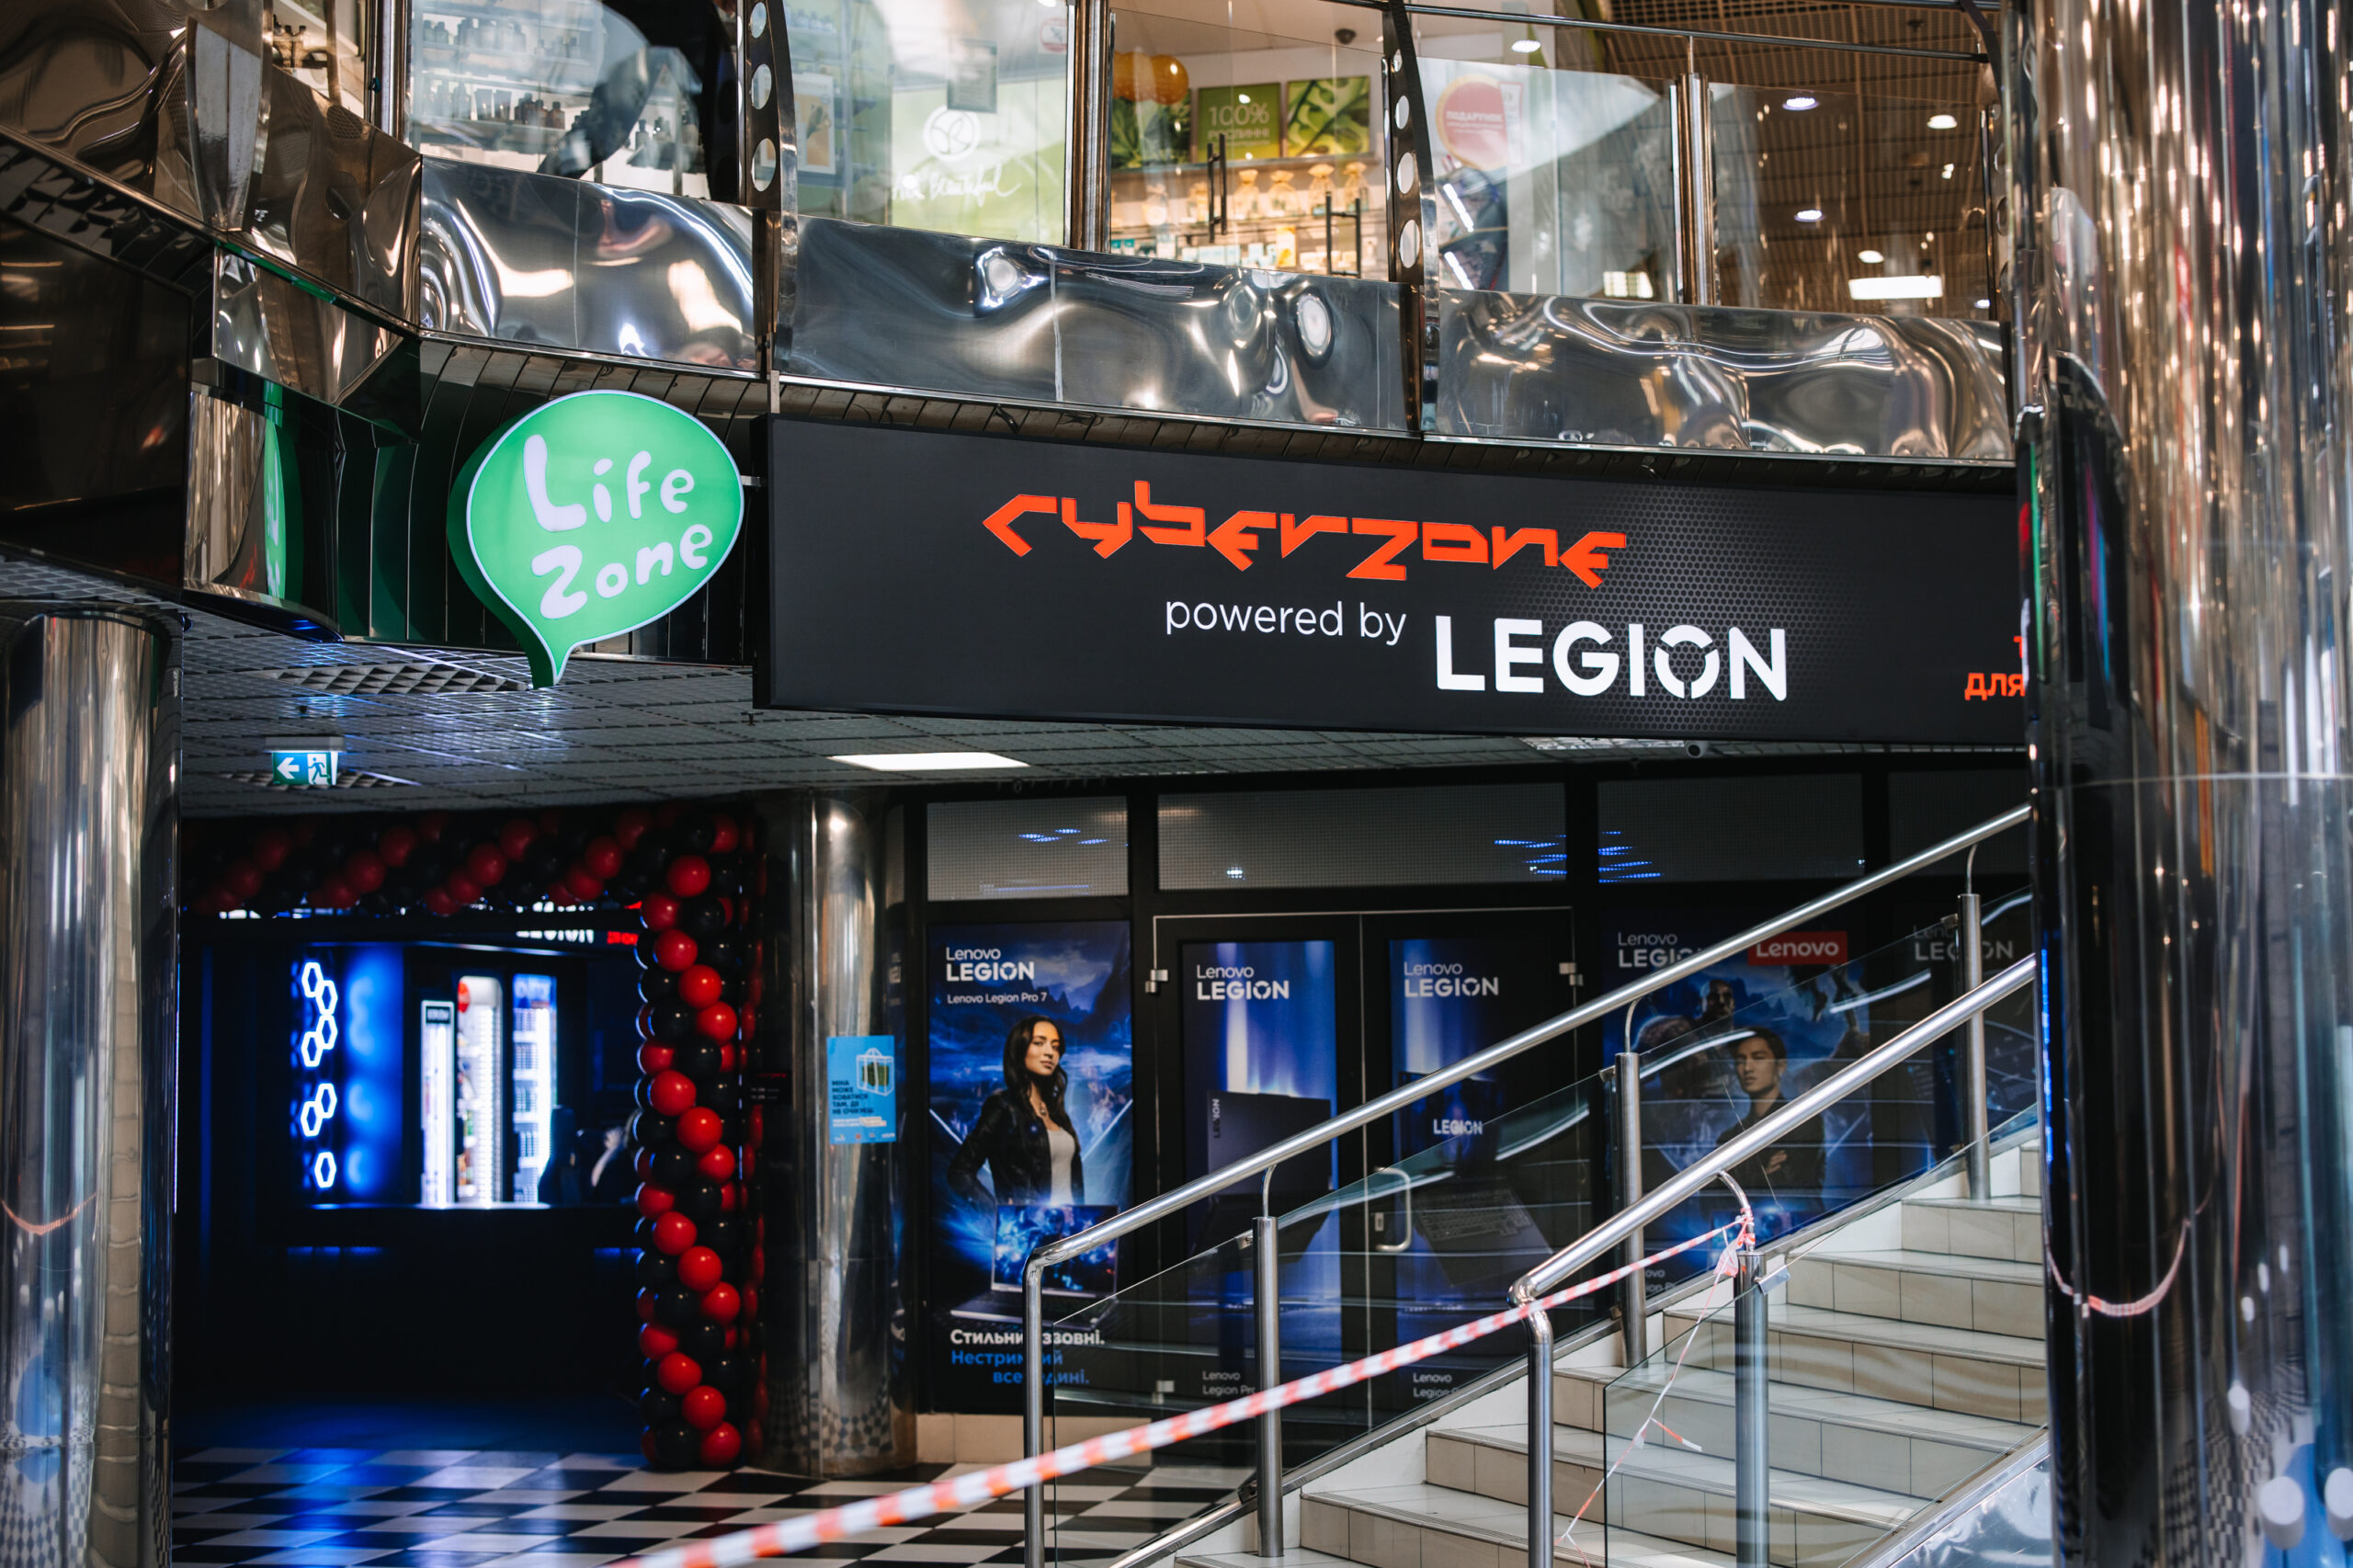 cyberzone powered by legion